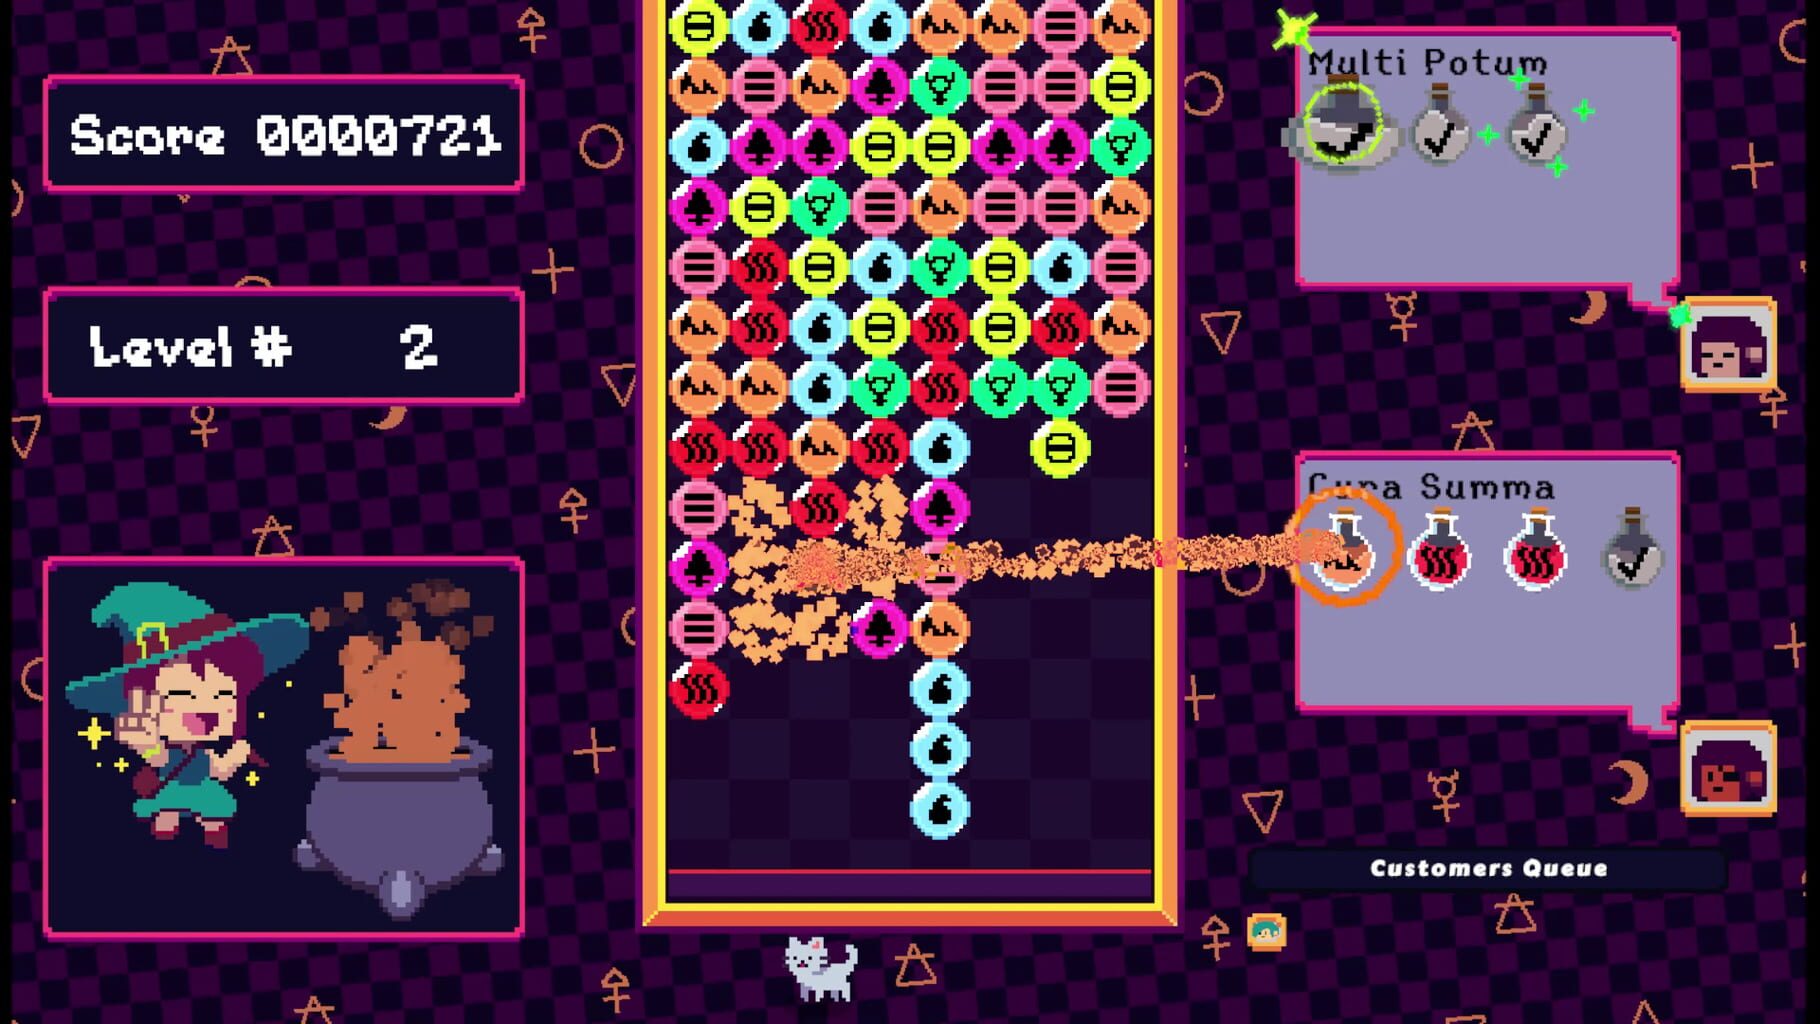 502's Arcade screenshot